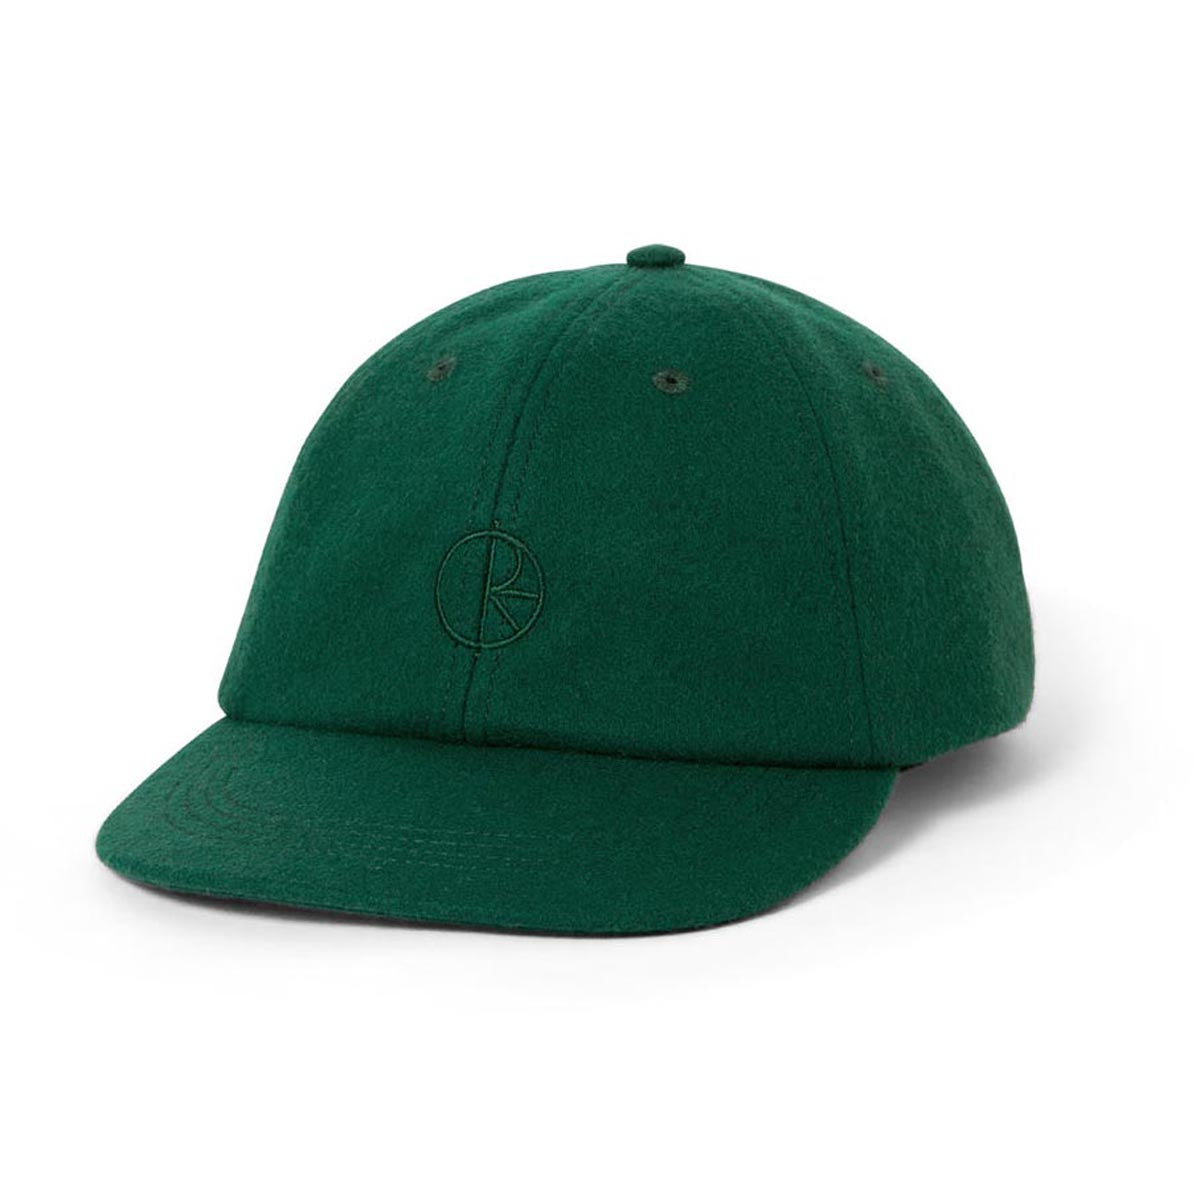 Polar Tom Wool Hat - Dark Green image 1